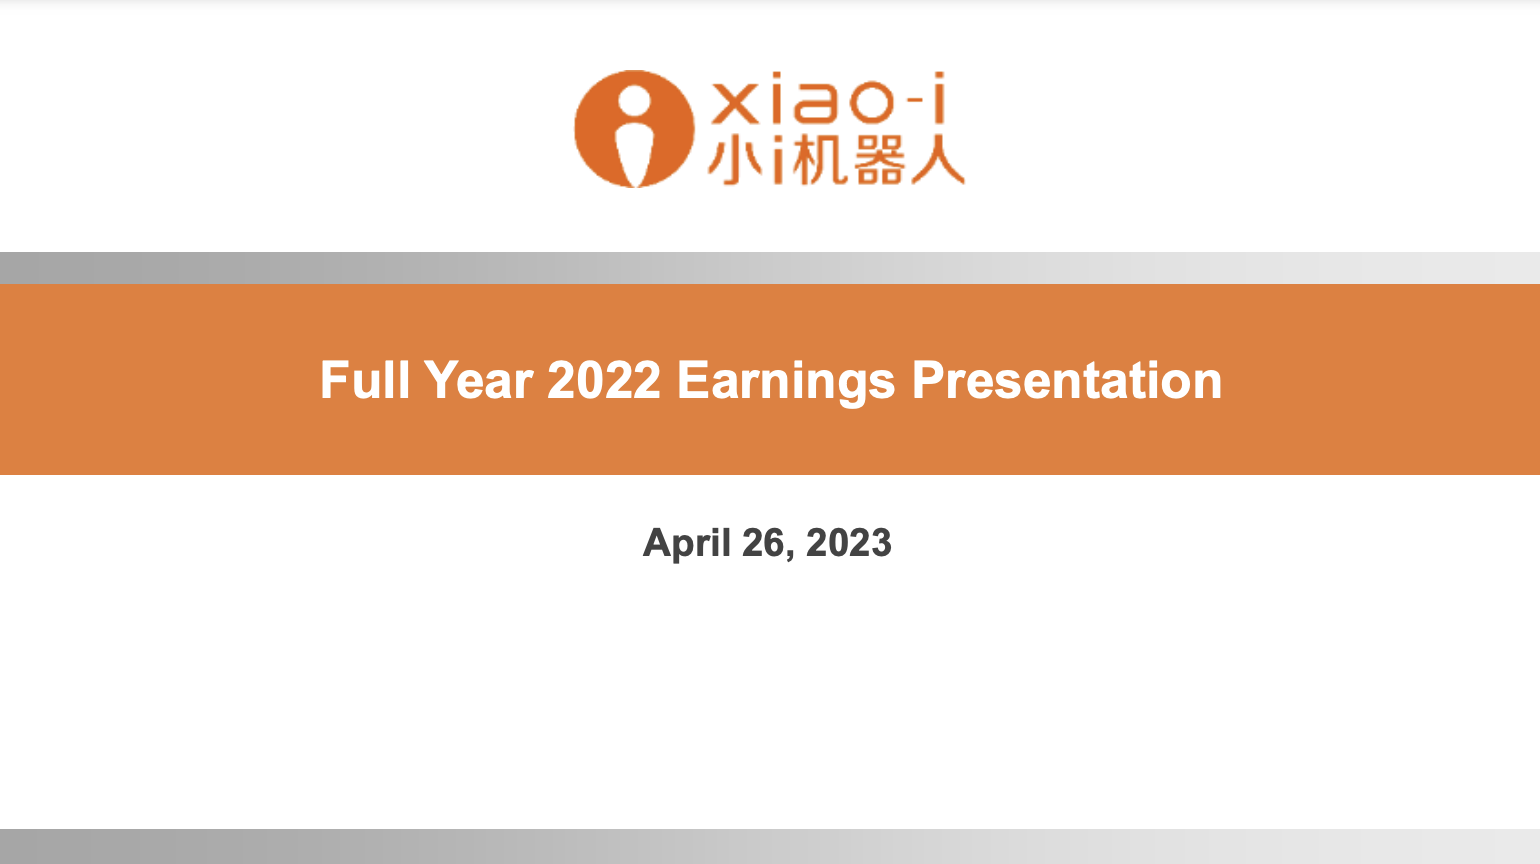 Xiao-I Corporation Full Year 2022 Earnings Presentation thumbnail